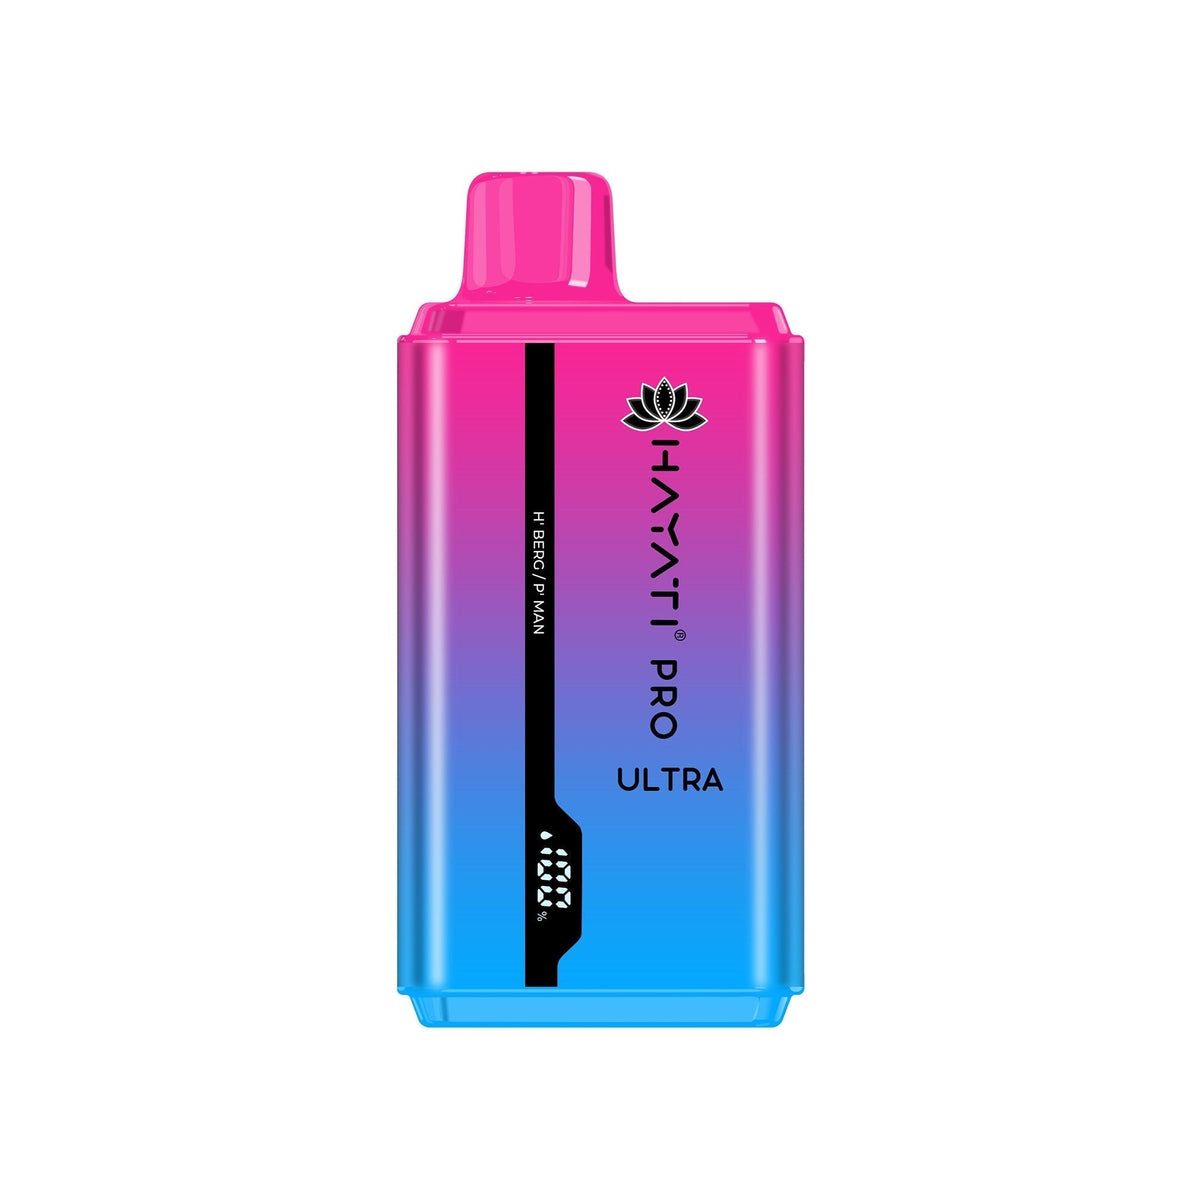 Hayati Pro Ultra 15000 Puffs Disposable Vape Pod Kit - Loco Vape UK